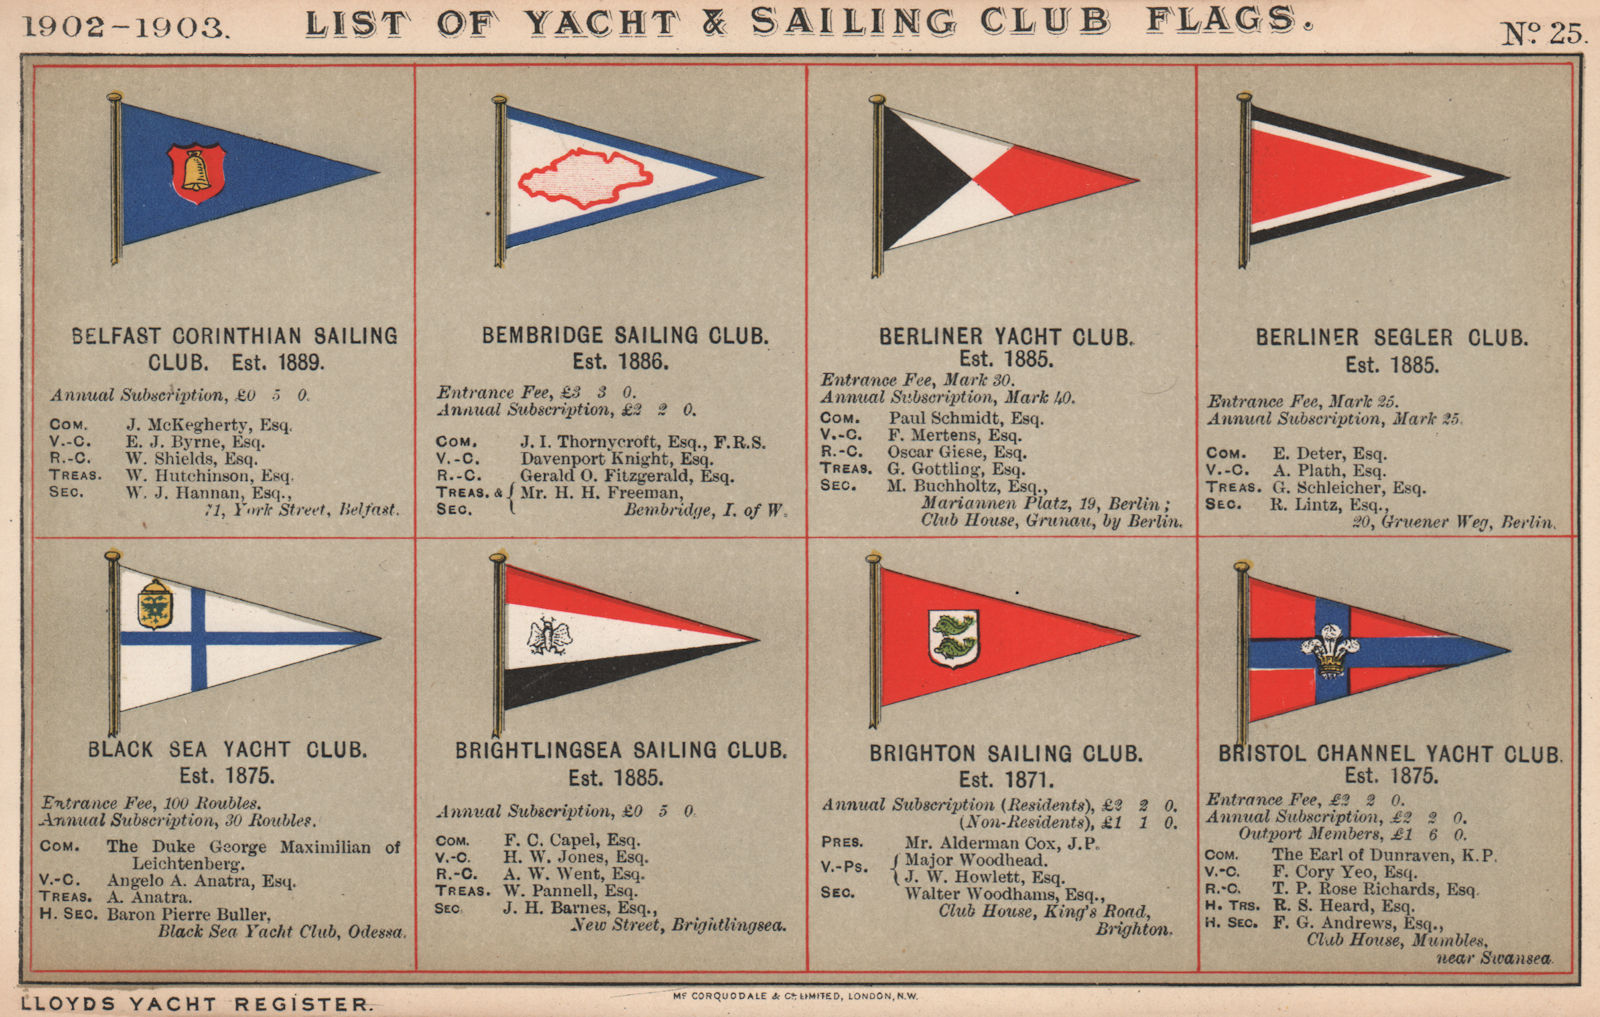 YACHT & SAILING CLUB FLAGS B. Belfast Corinthian - Bristol Channel 1902 print